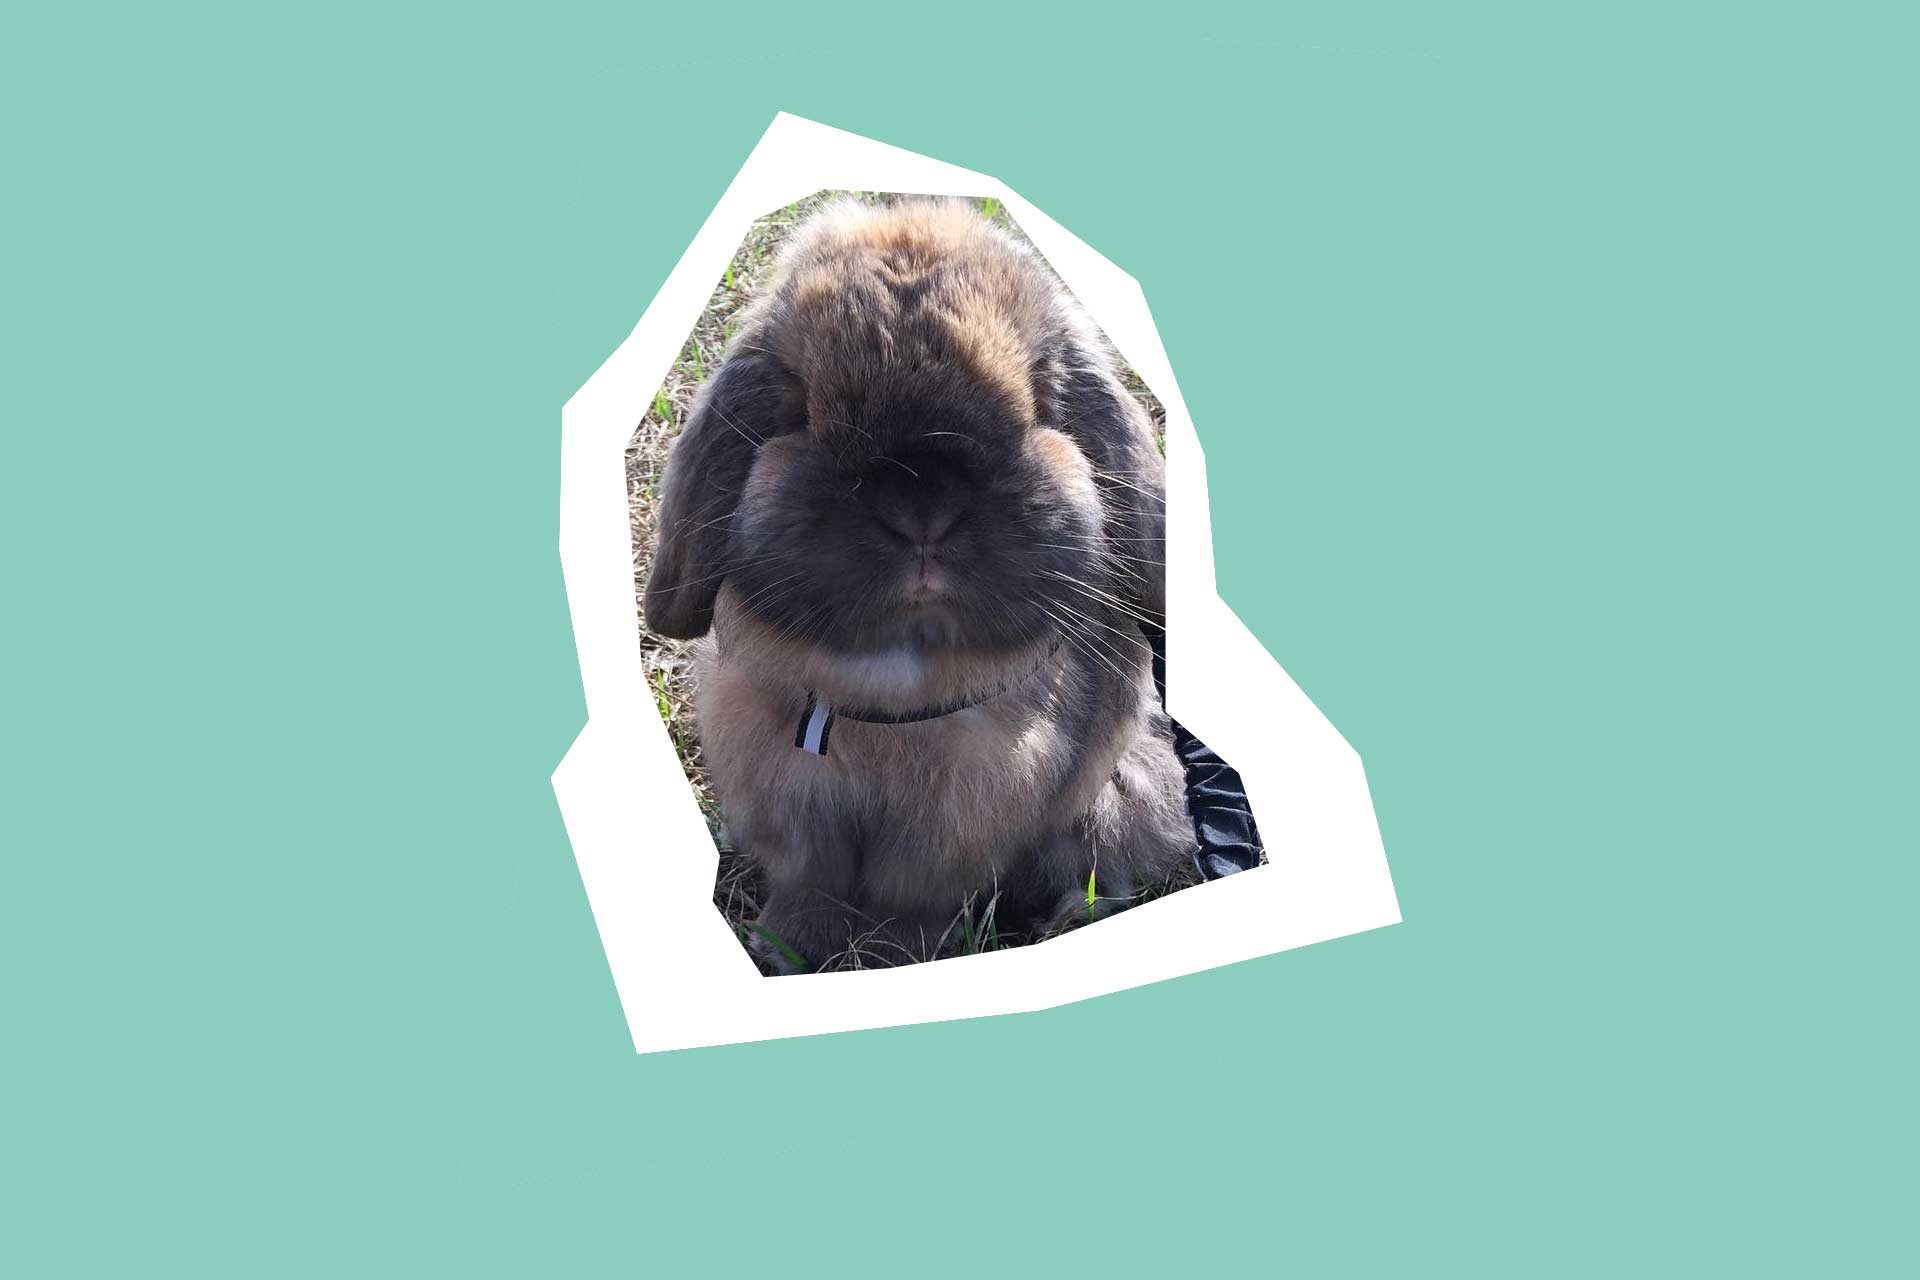 Dusty the grumpy rabbit